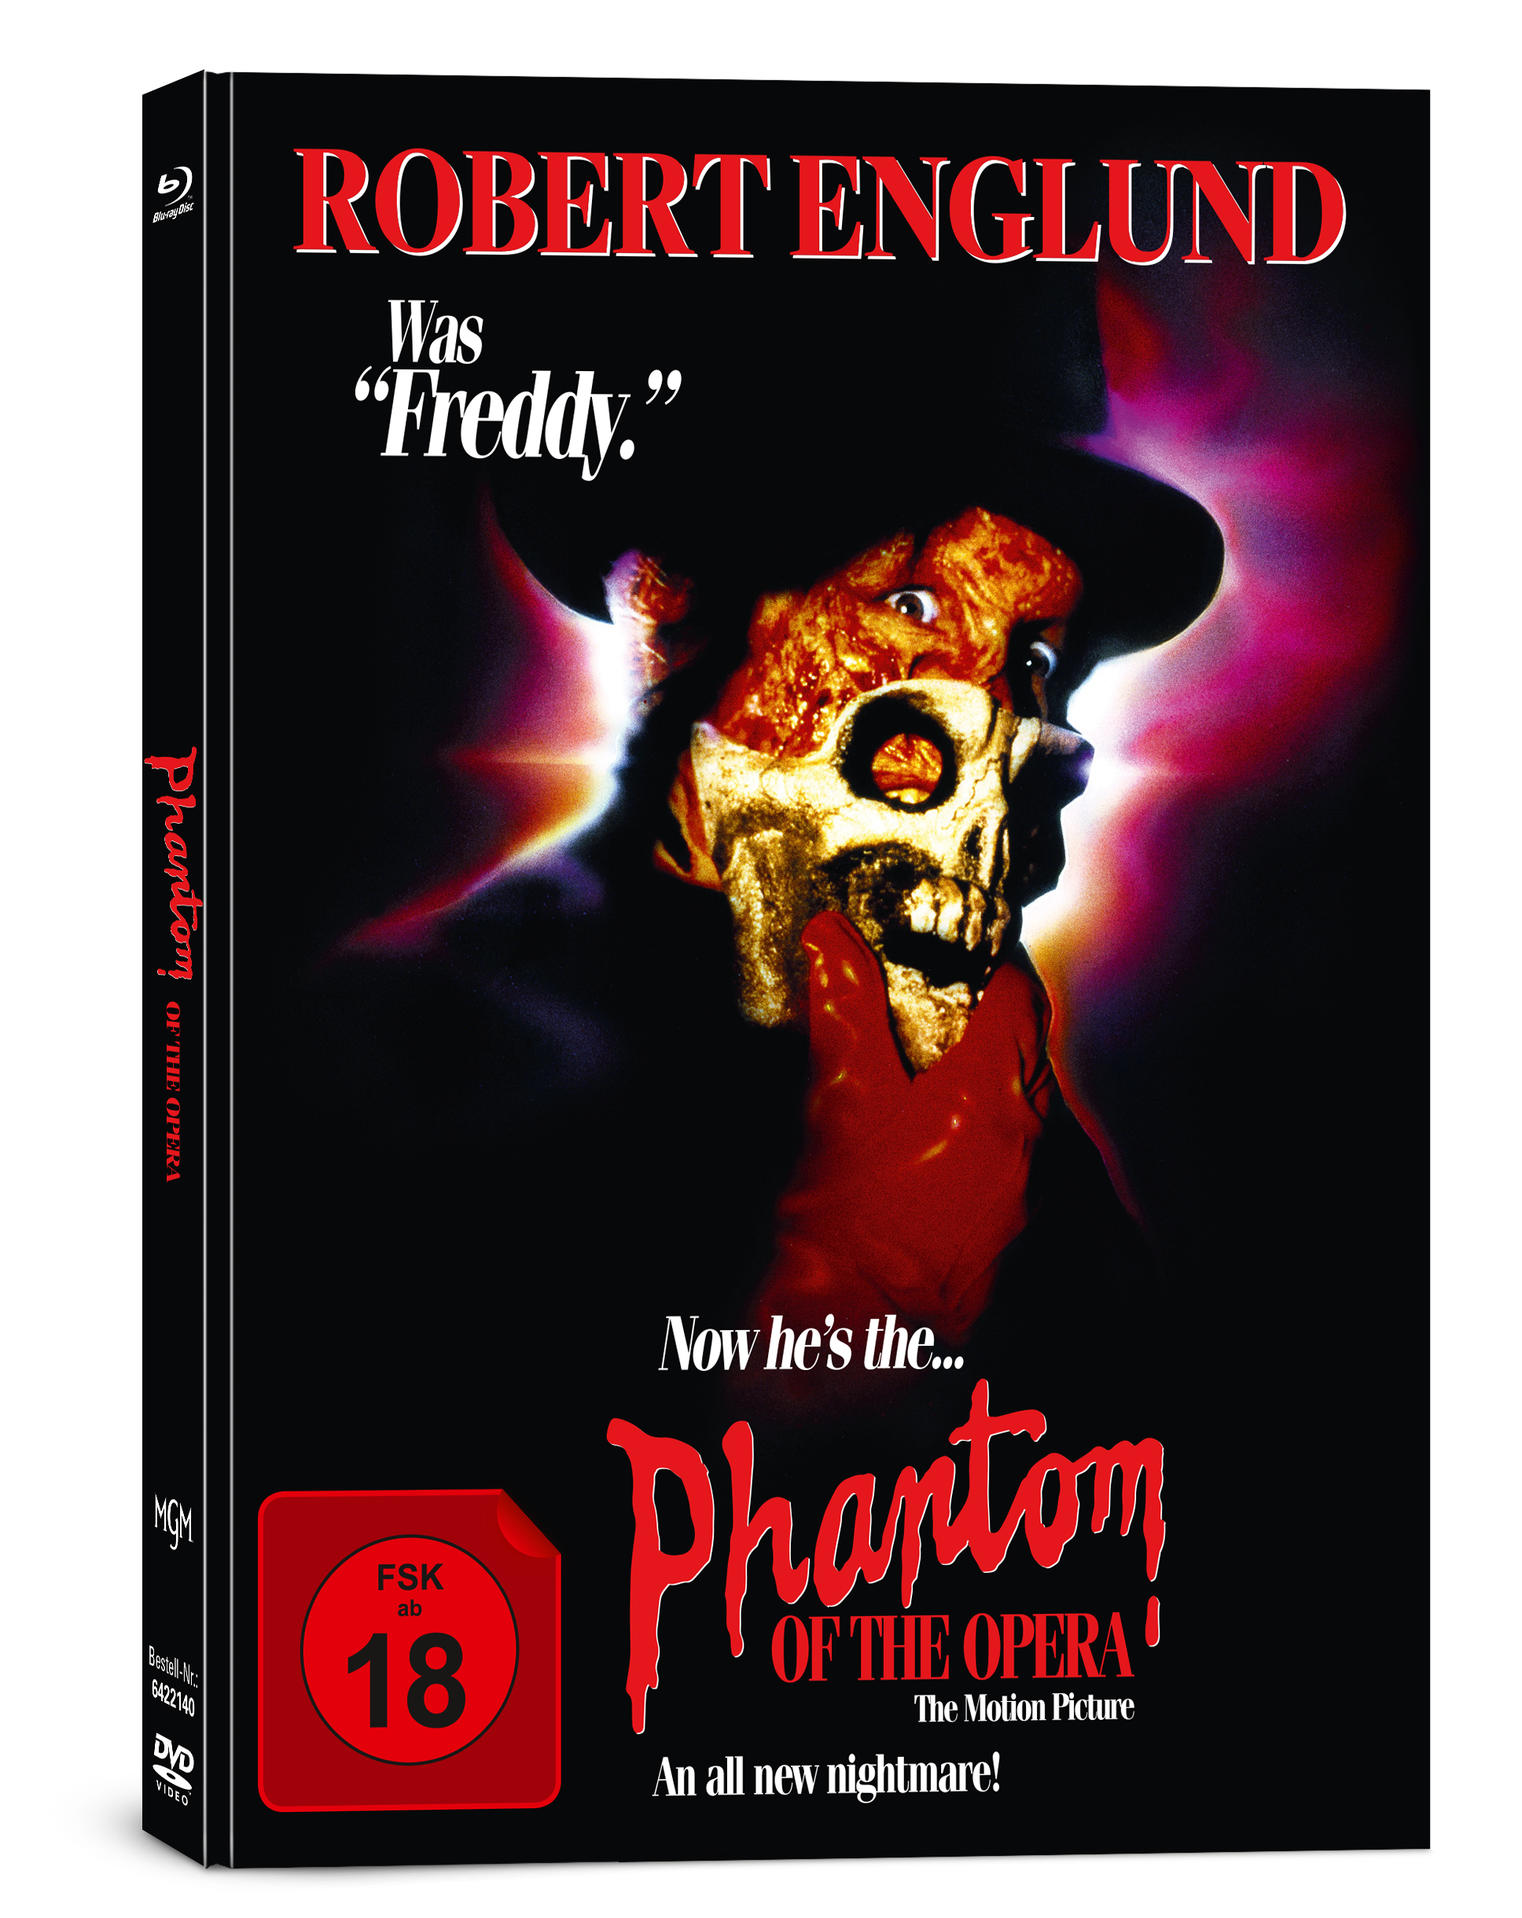 DVD Blu-ray of Phantom the + Opera